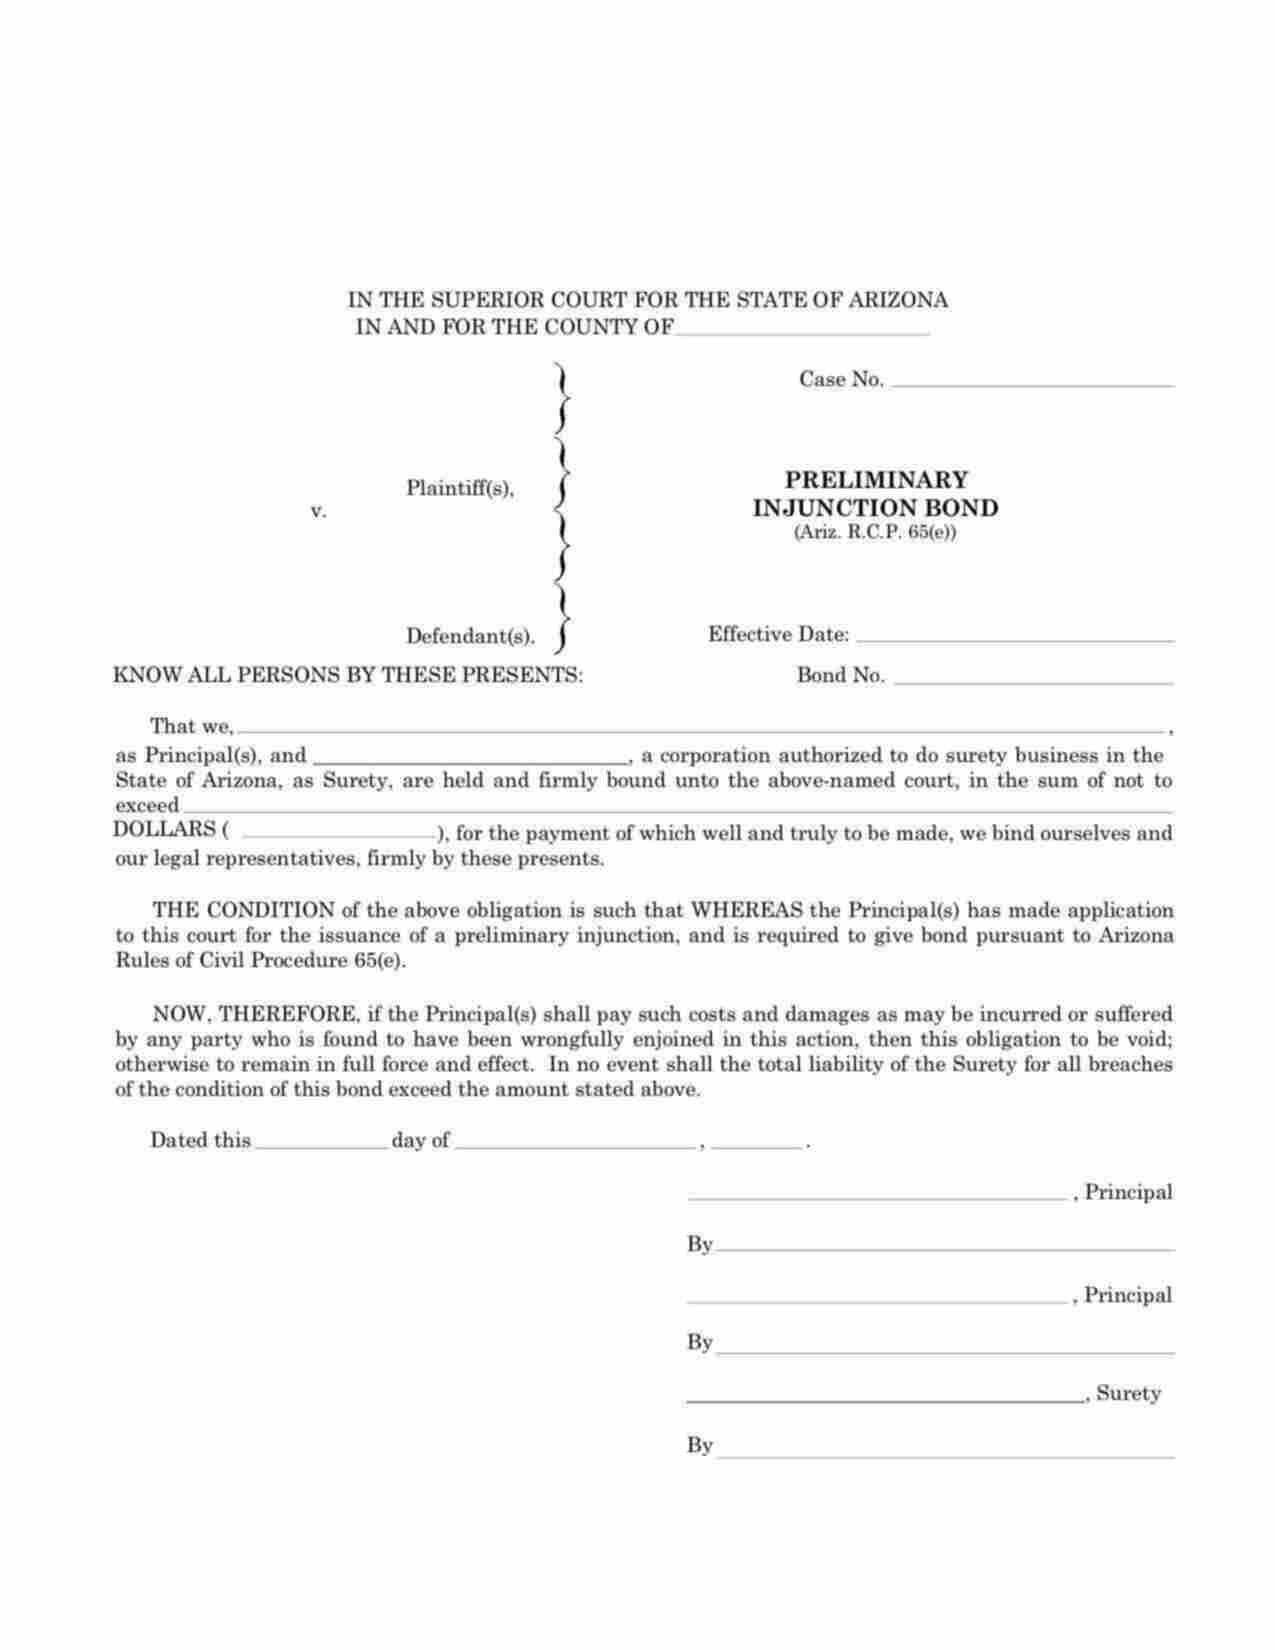 Arizona Preliminary Injunction Bond Form